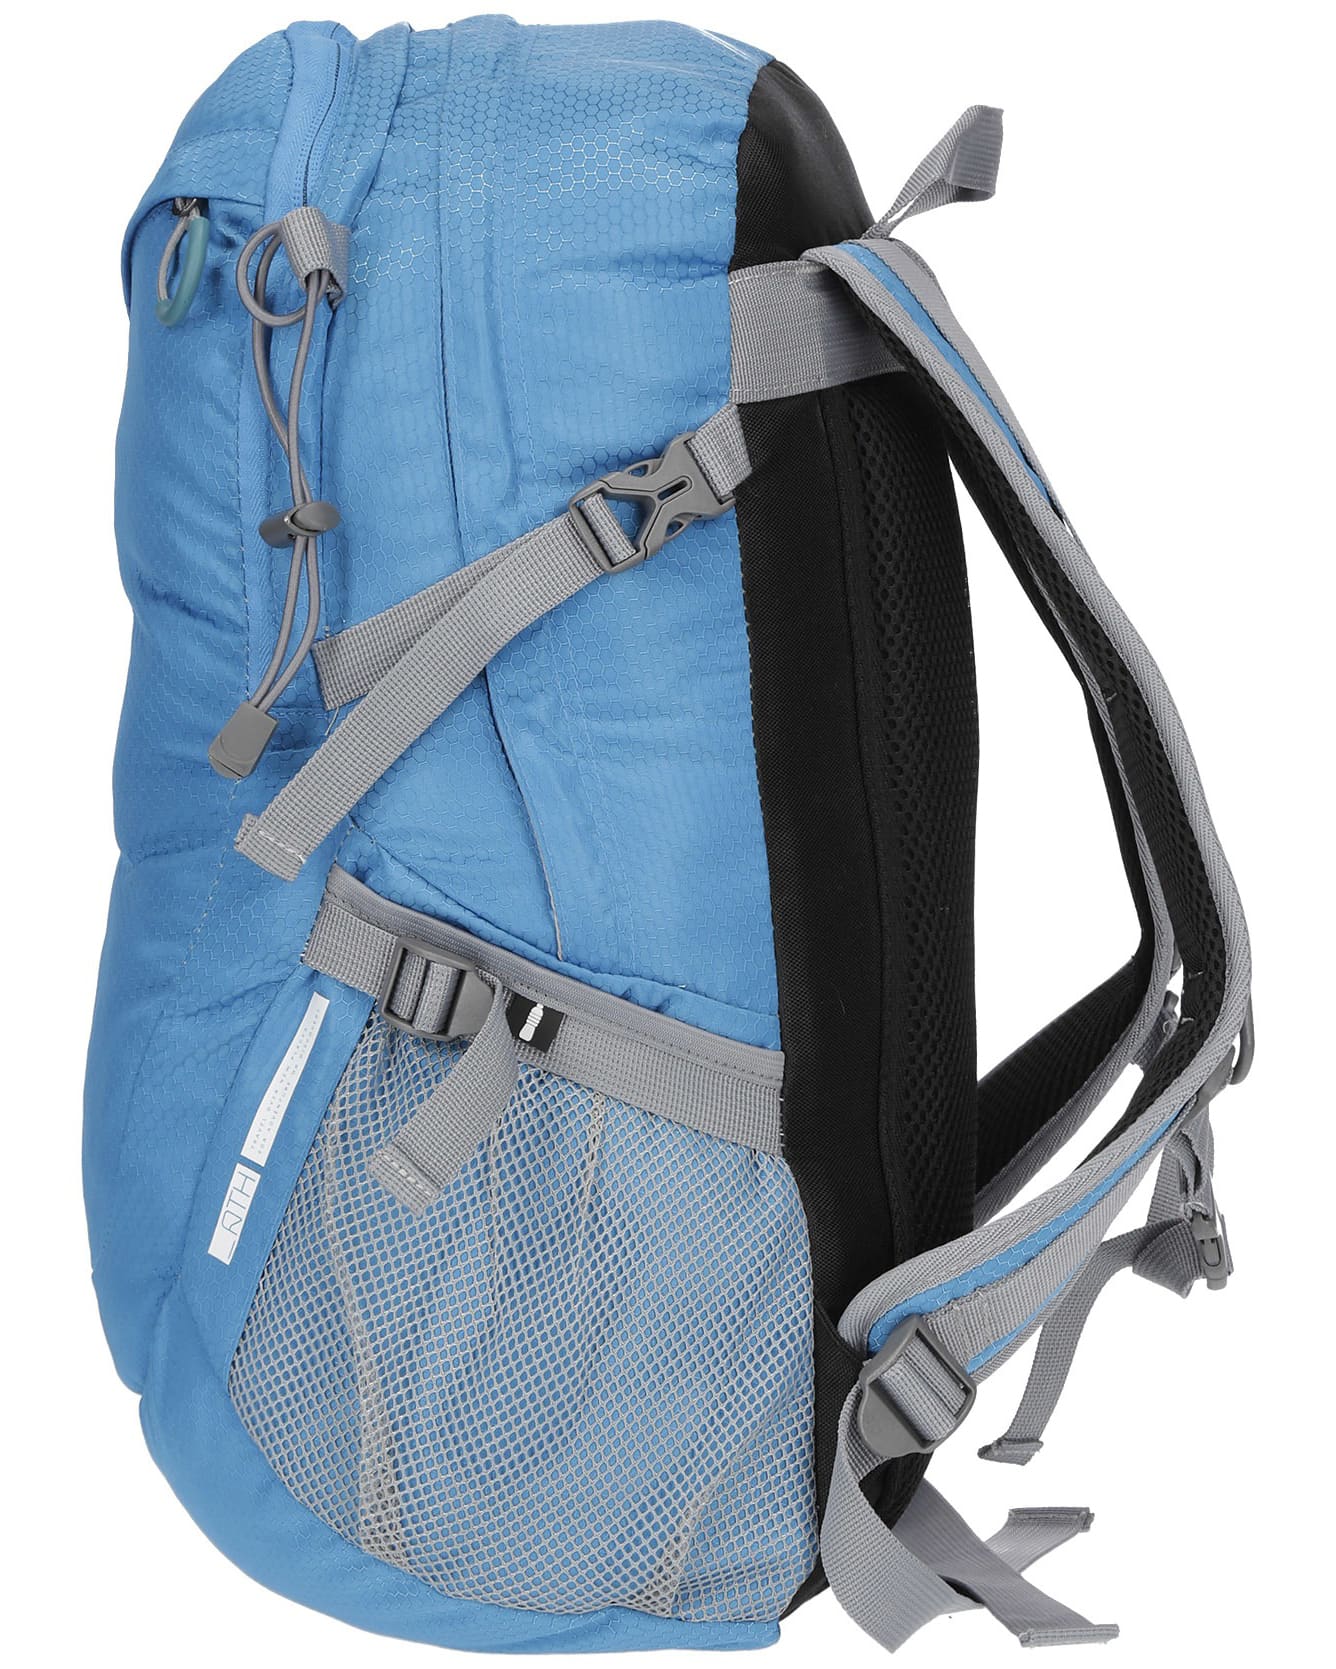 4F Unisex Backpack - Blue